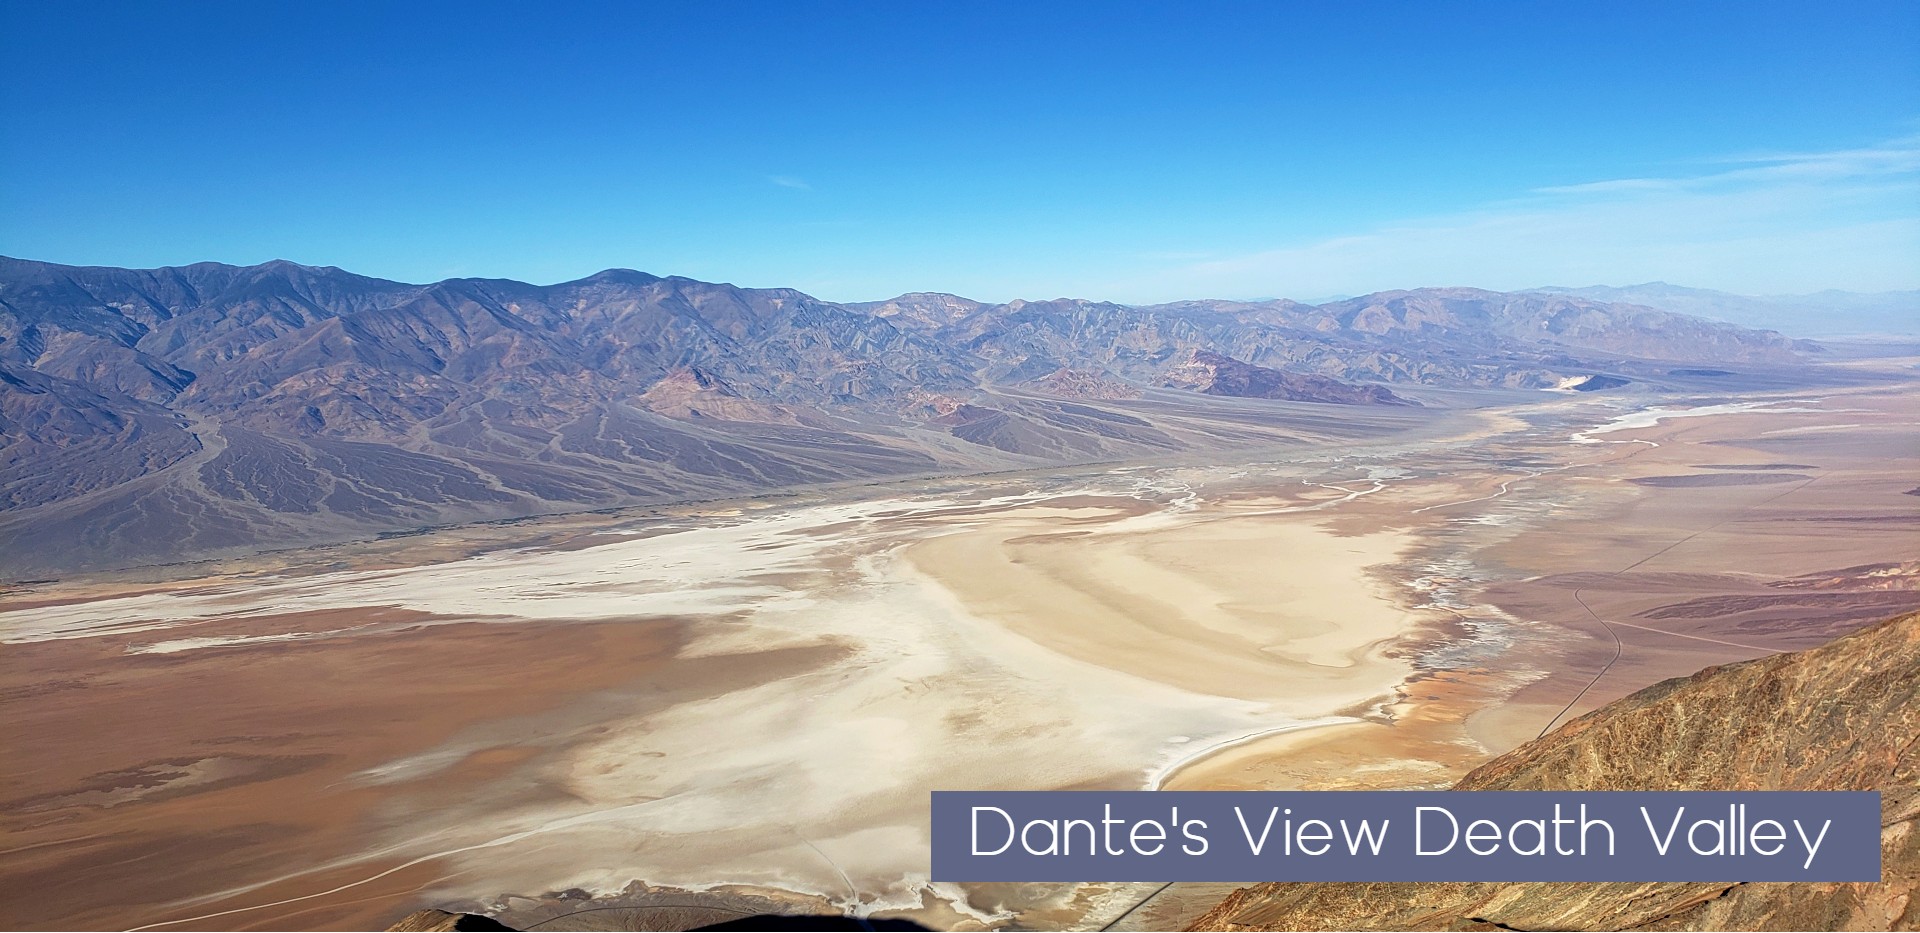 Dante's View death Valley